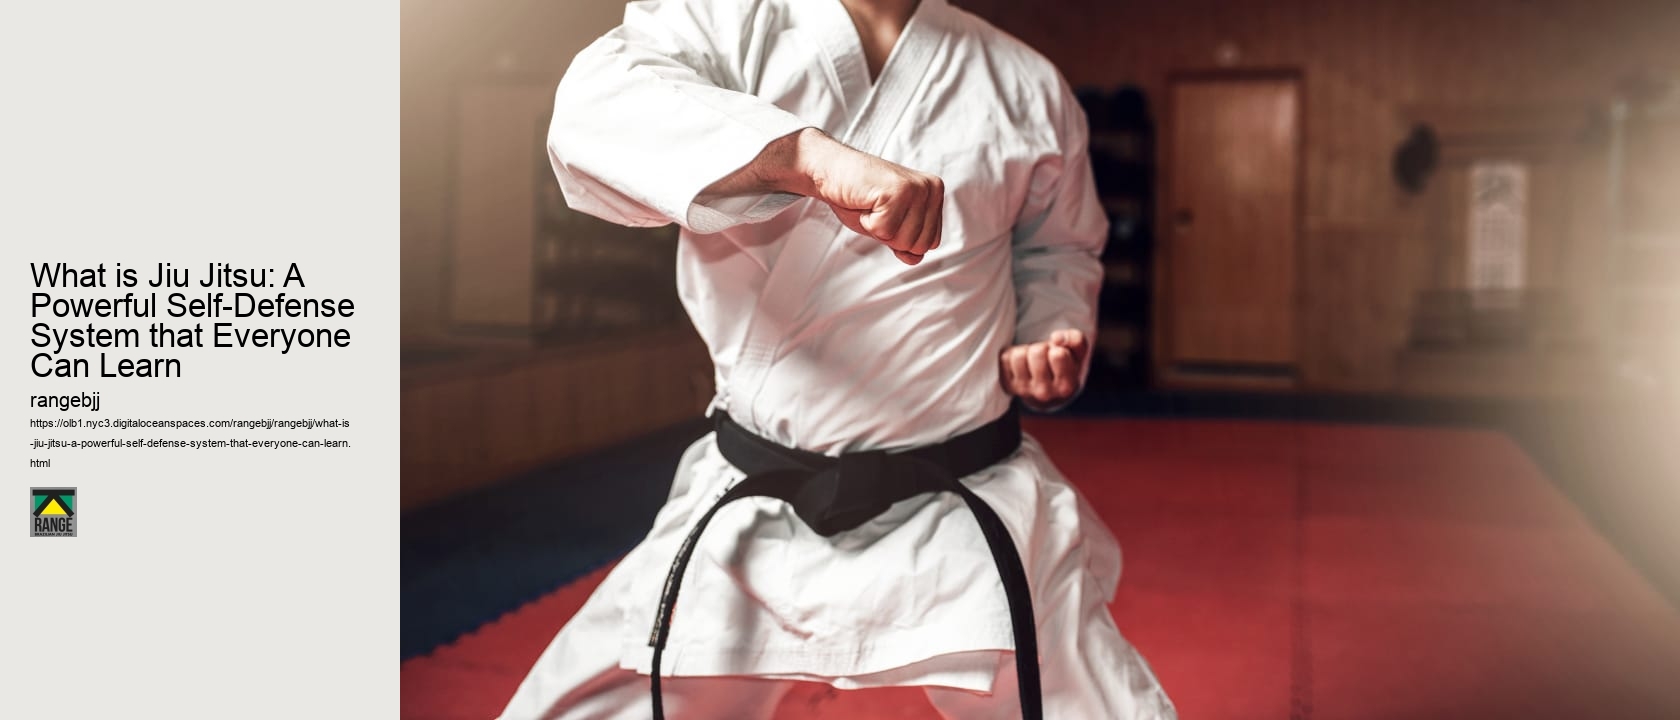 What is Jiu Jitsu: A Powerful Self-Defense System that Everyone Can Learn